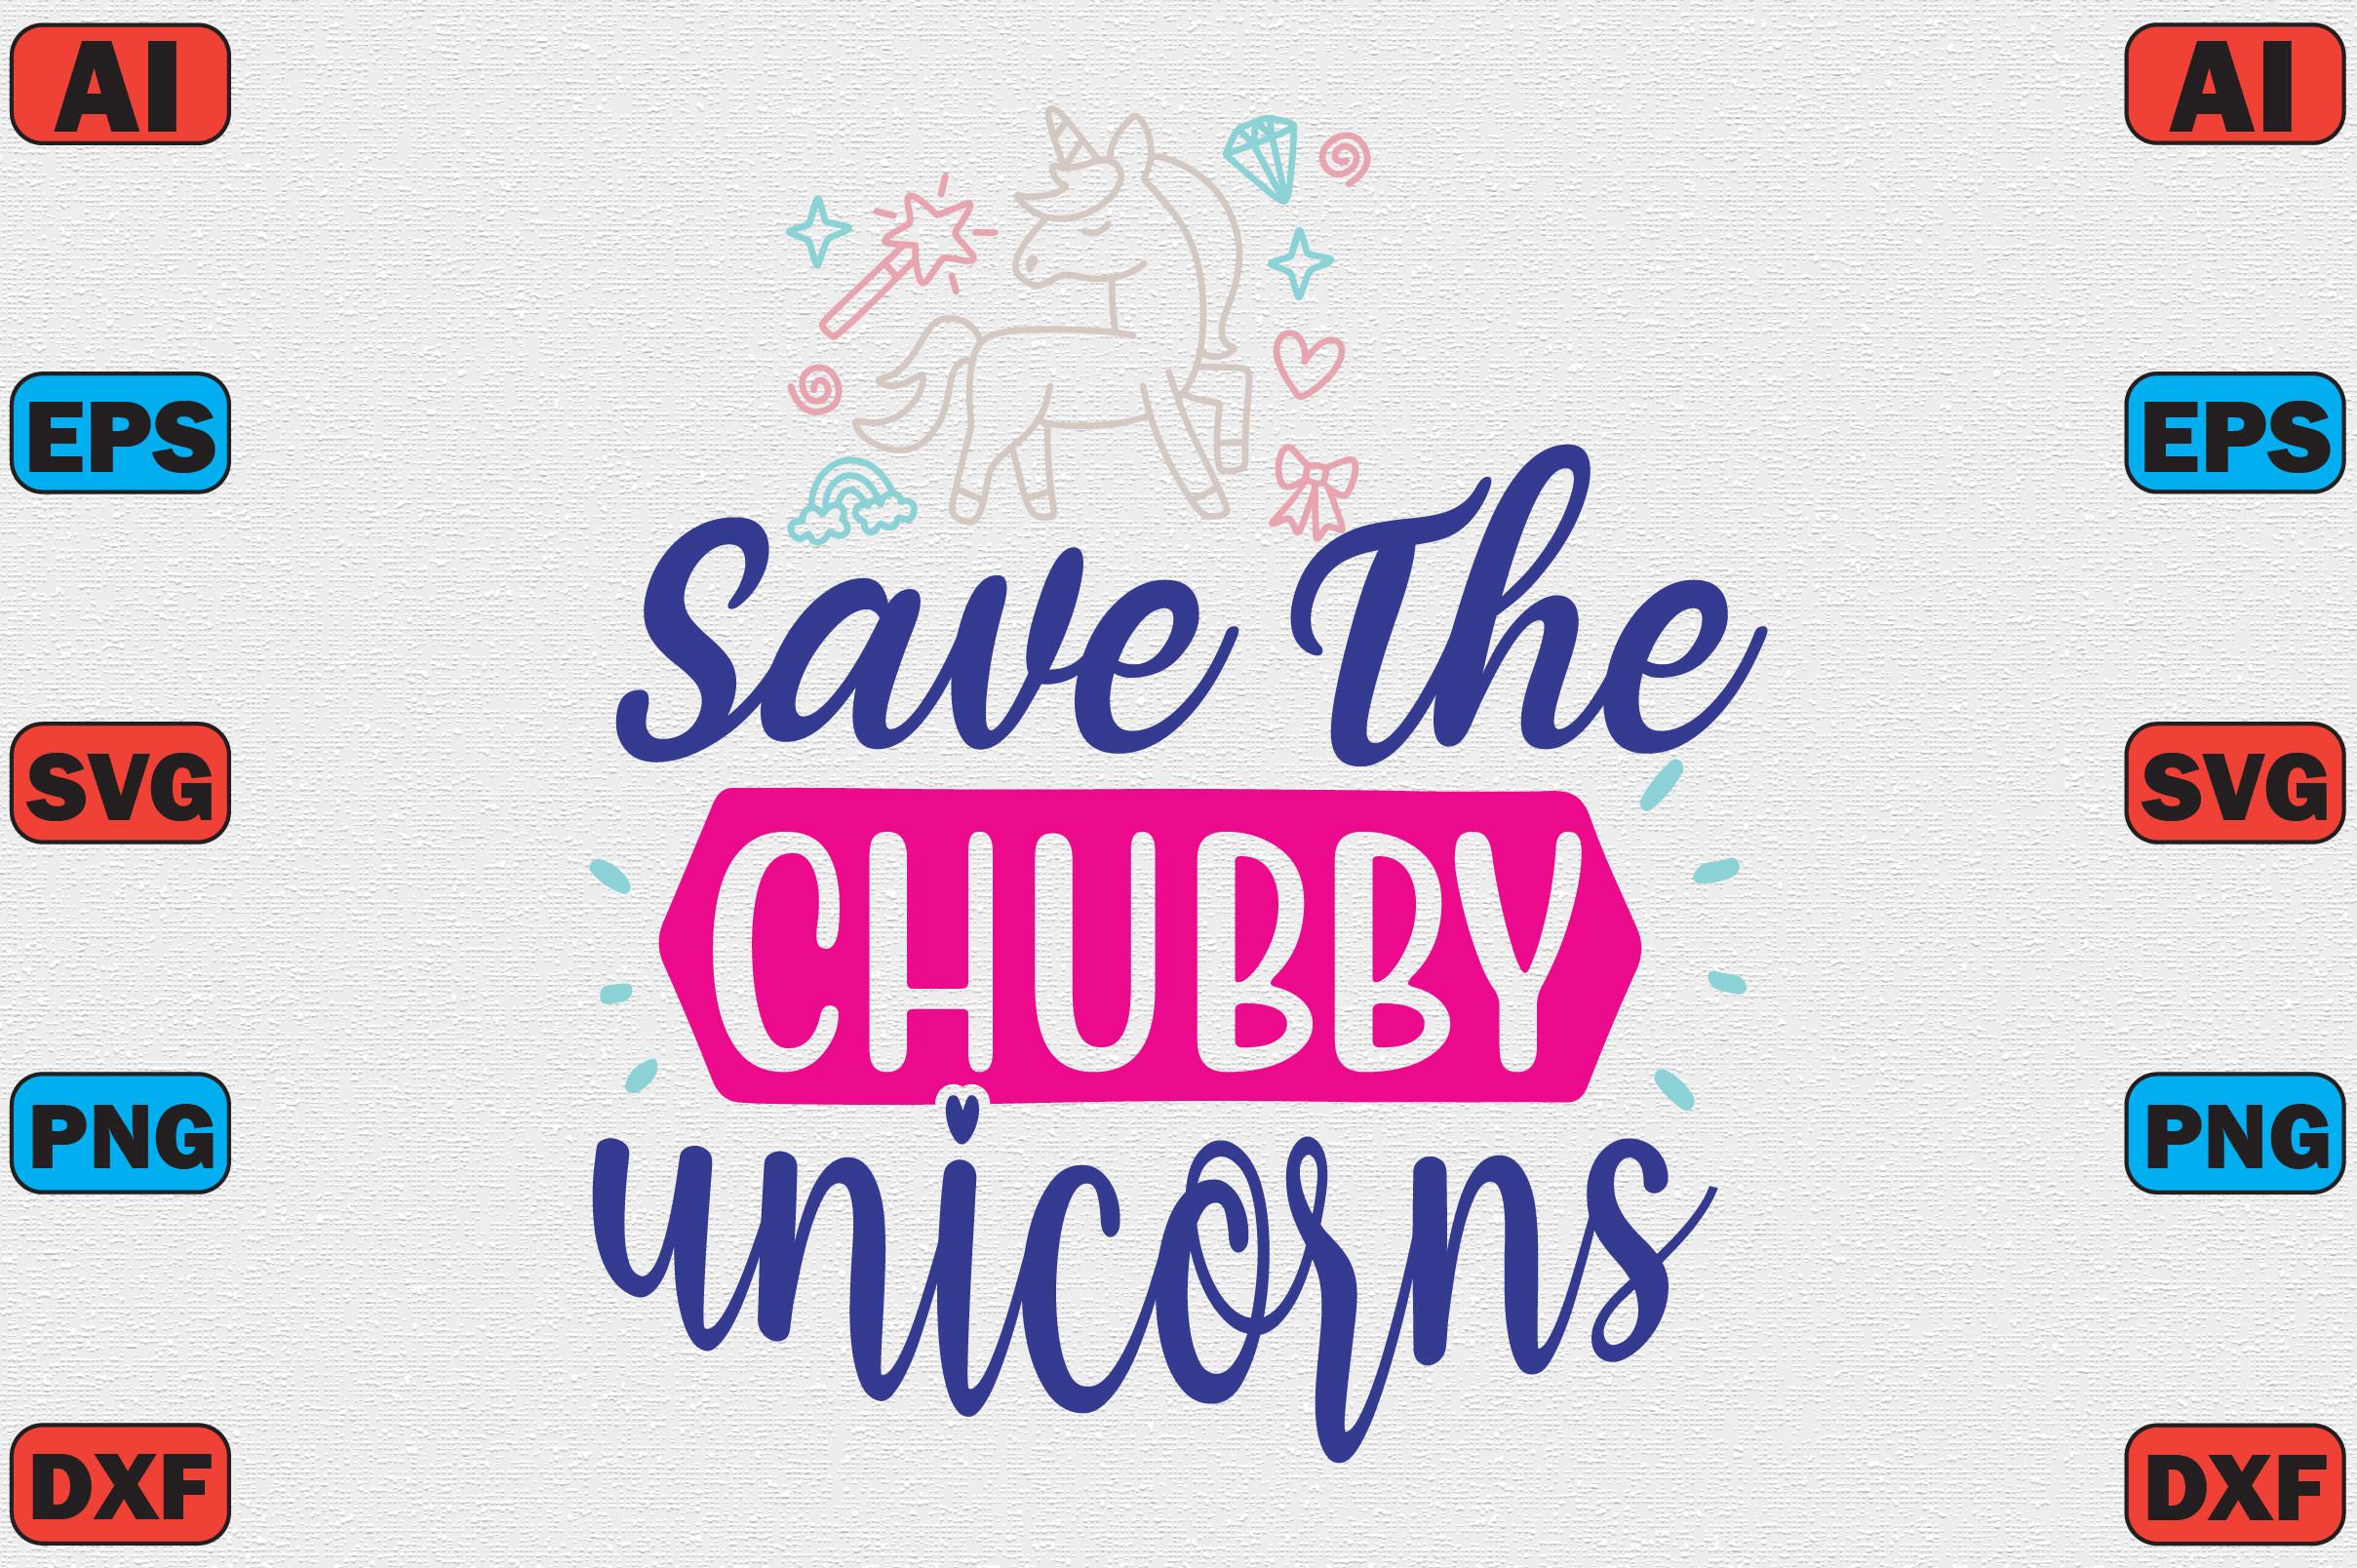 Save the Chubby Unicorns=2